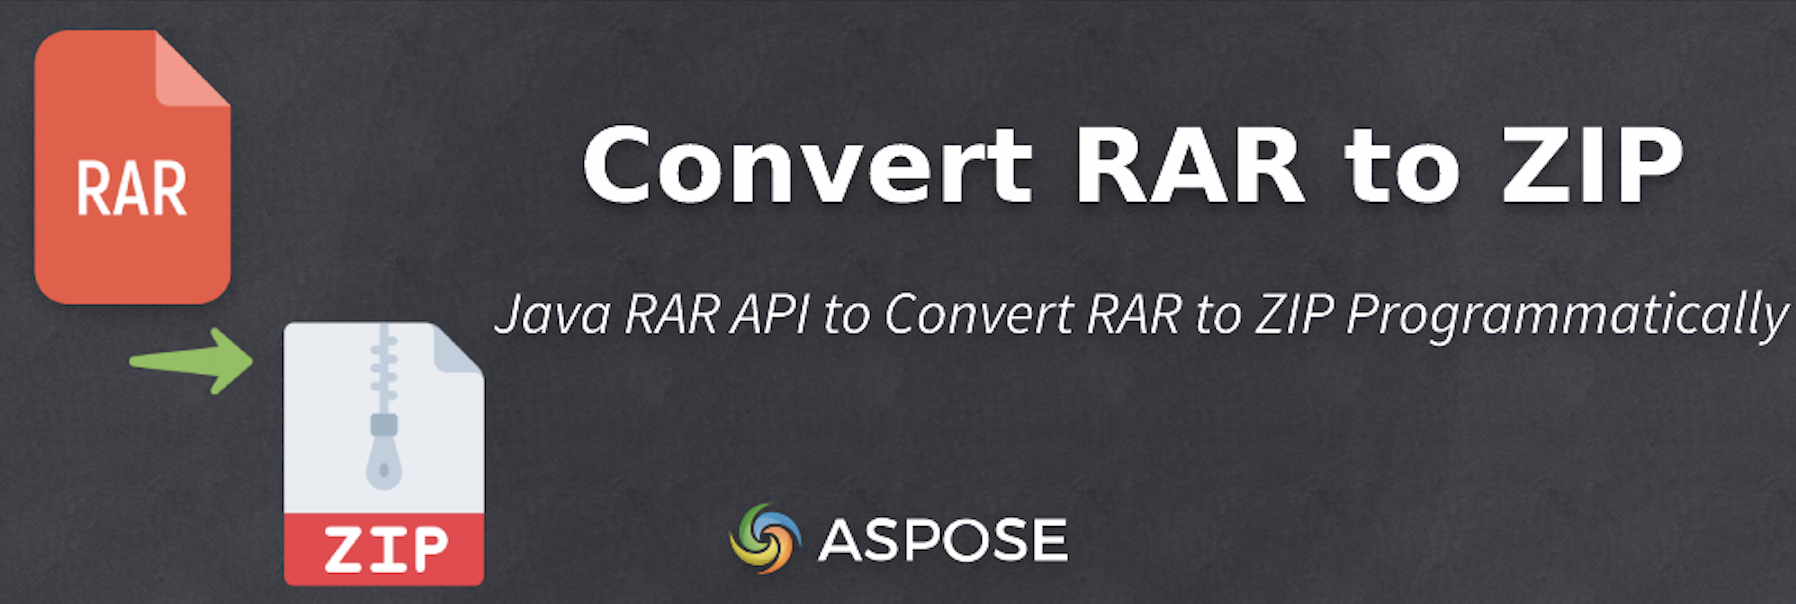 Chuyển đổi RAR sang ZIP trong Java - Java RAR API